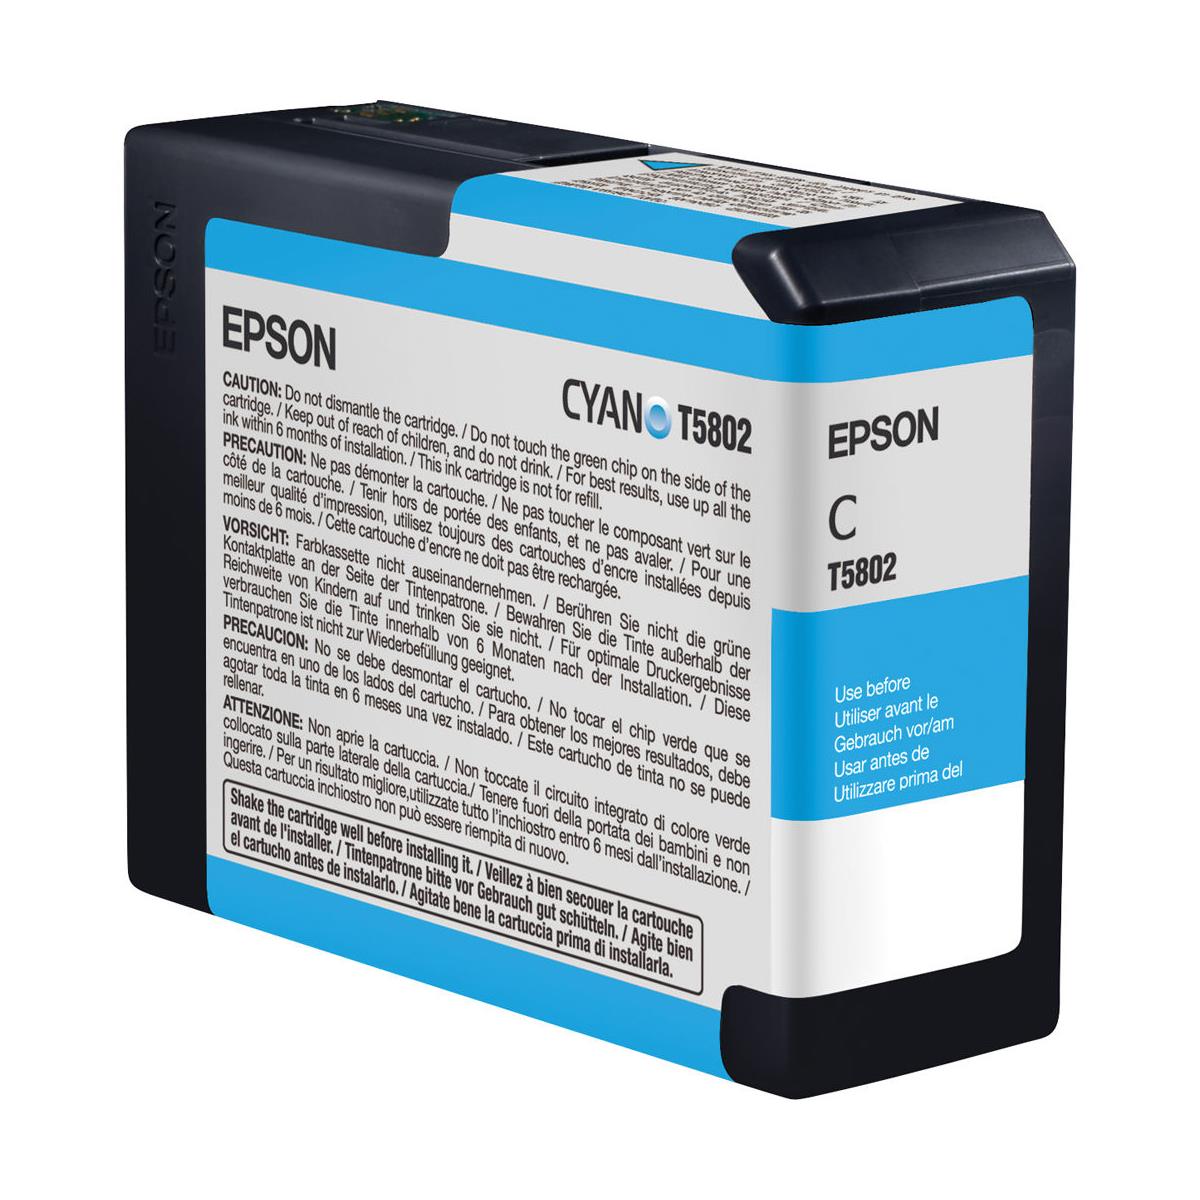 

Epson T580200 80ml Stylus Pro 3800 Cartridge, Cyan